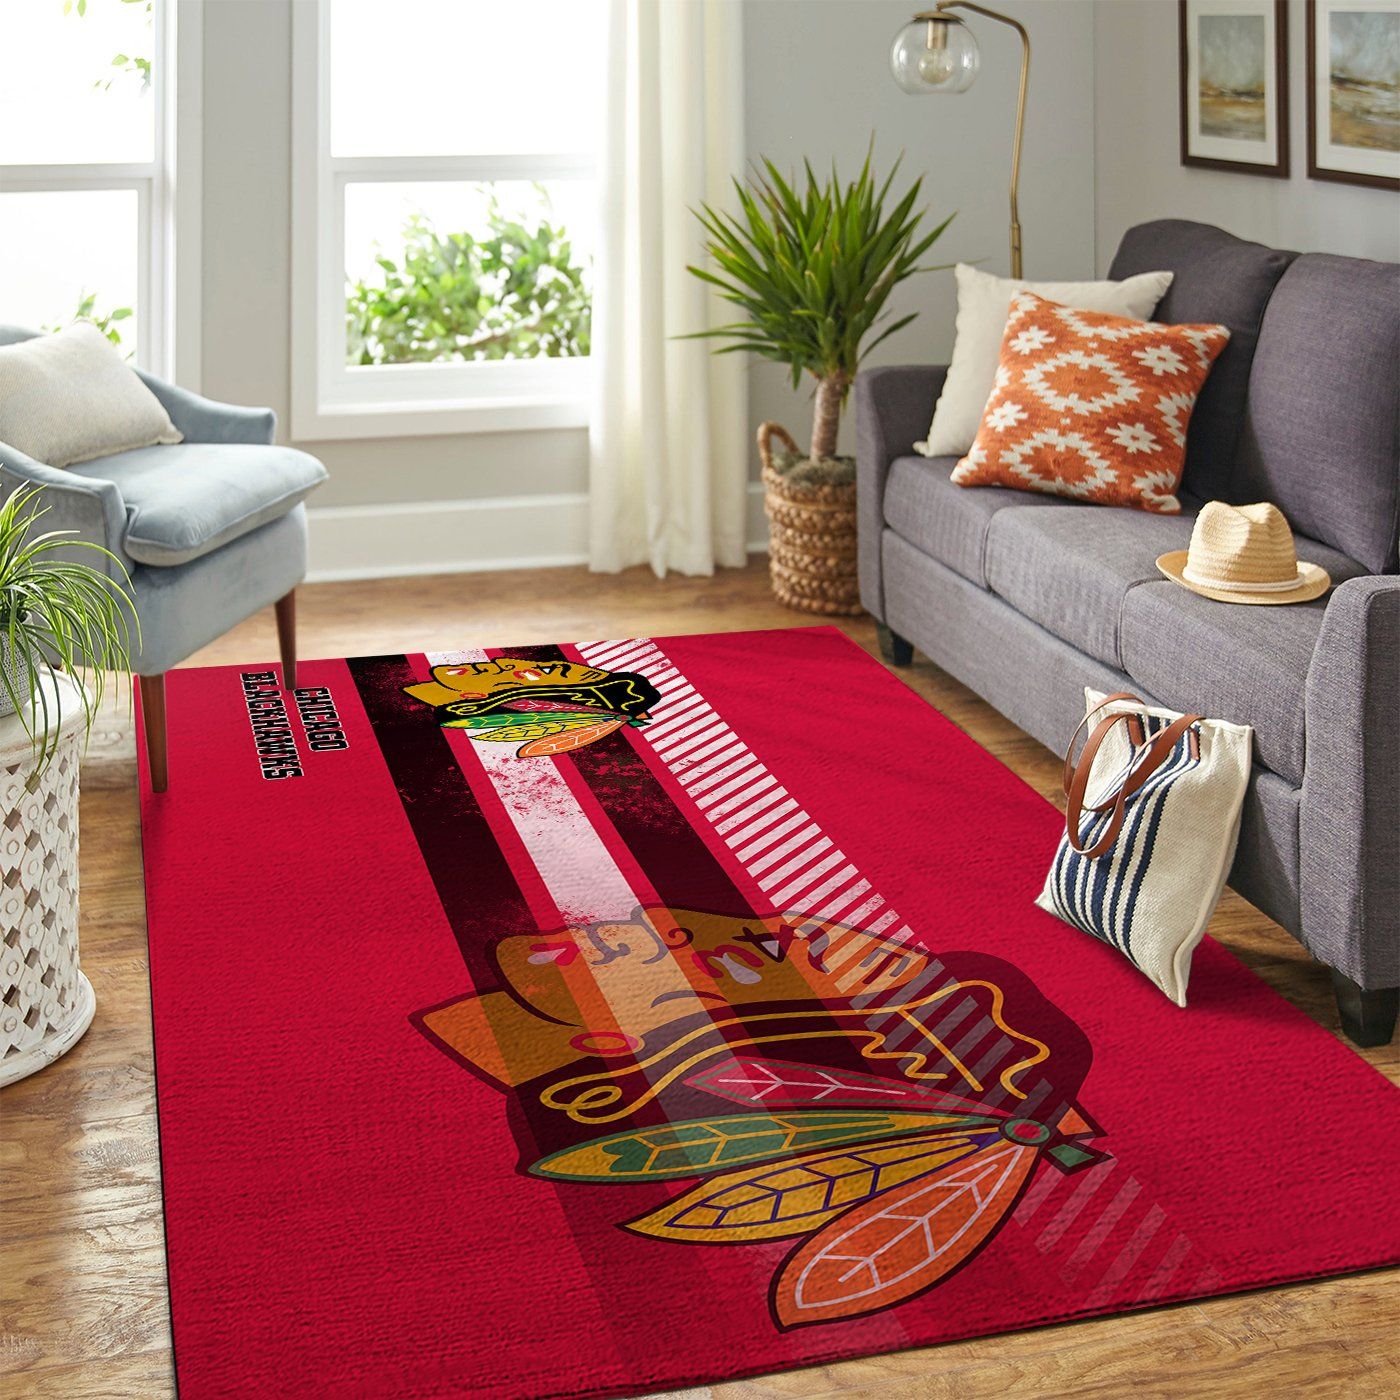 Chicago Blackhawks Nhl Team Logo Nice Type 7155 Rug Area Carpet Living Room Home Decor